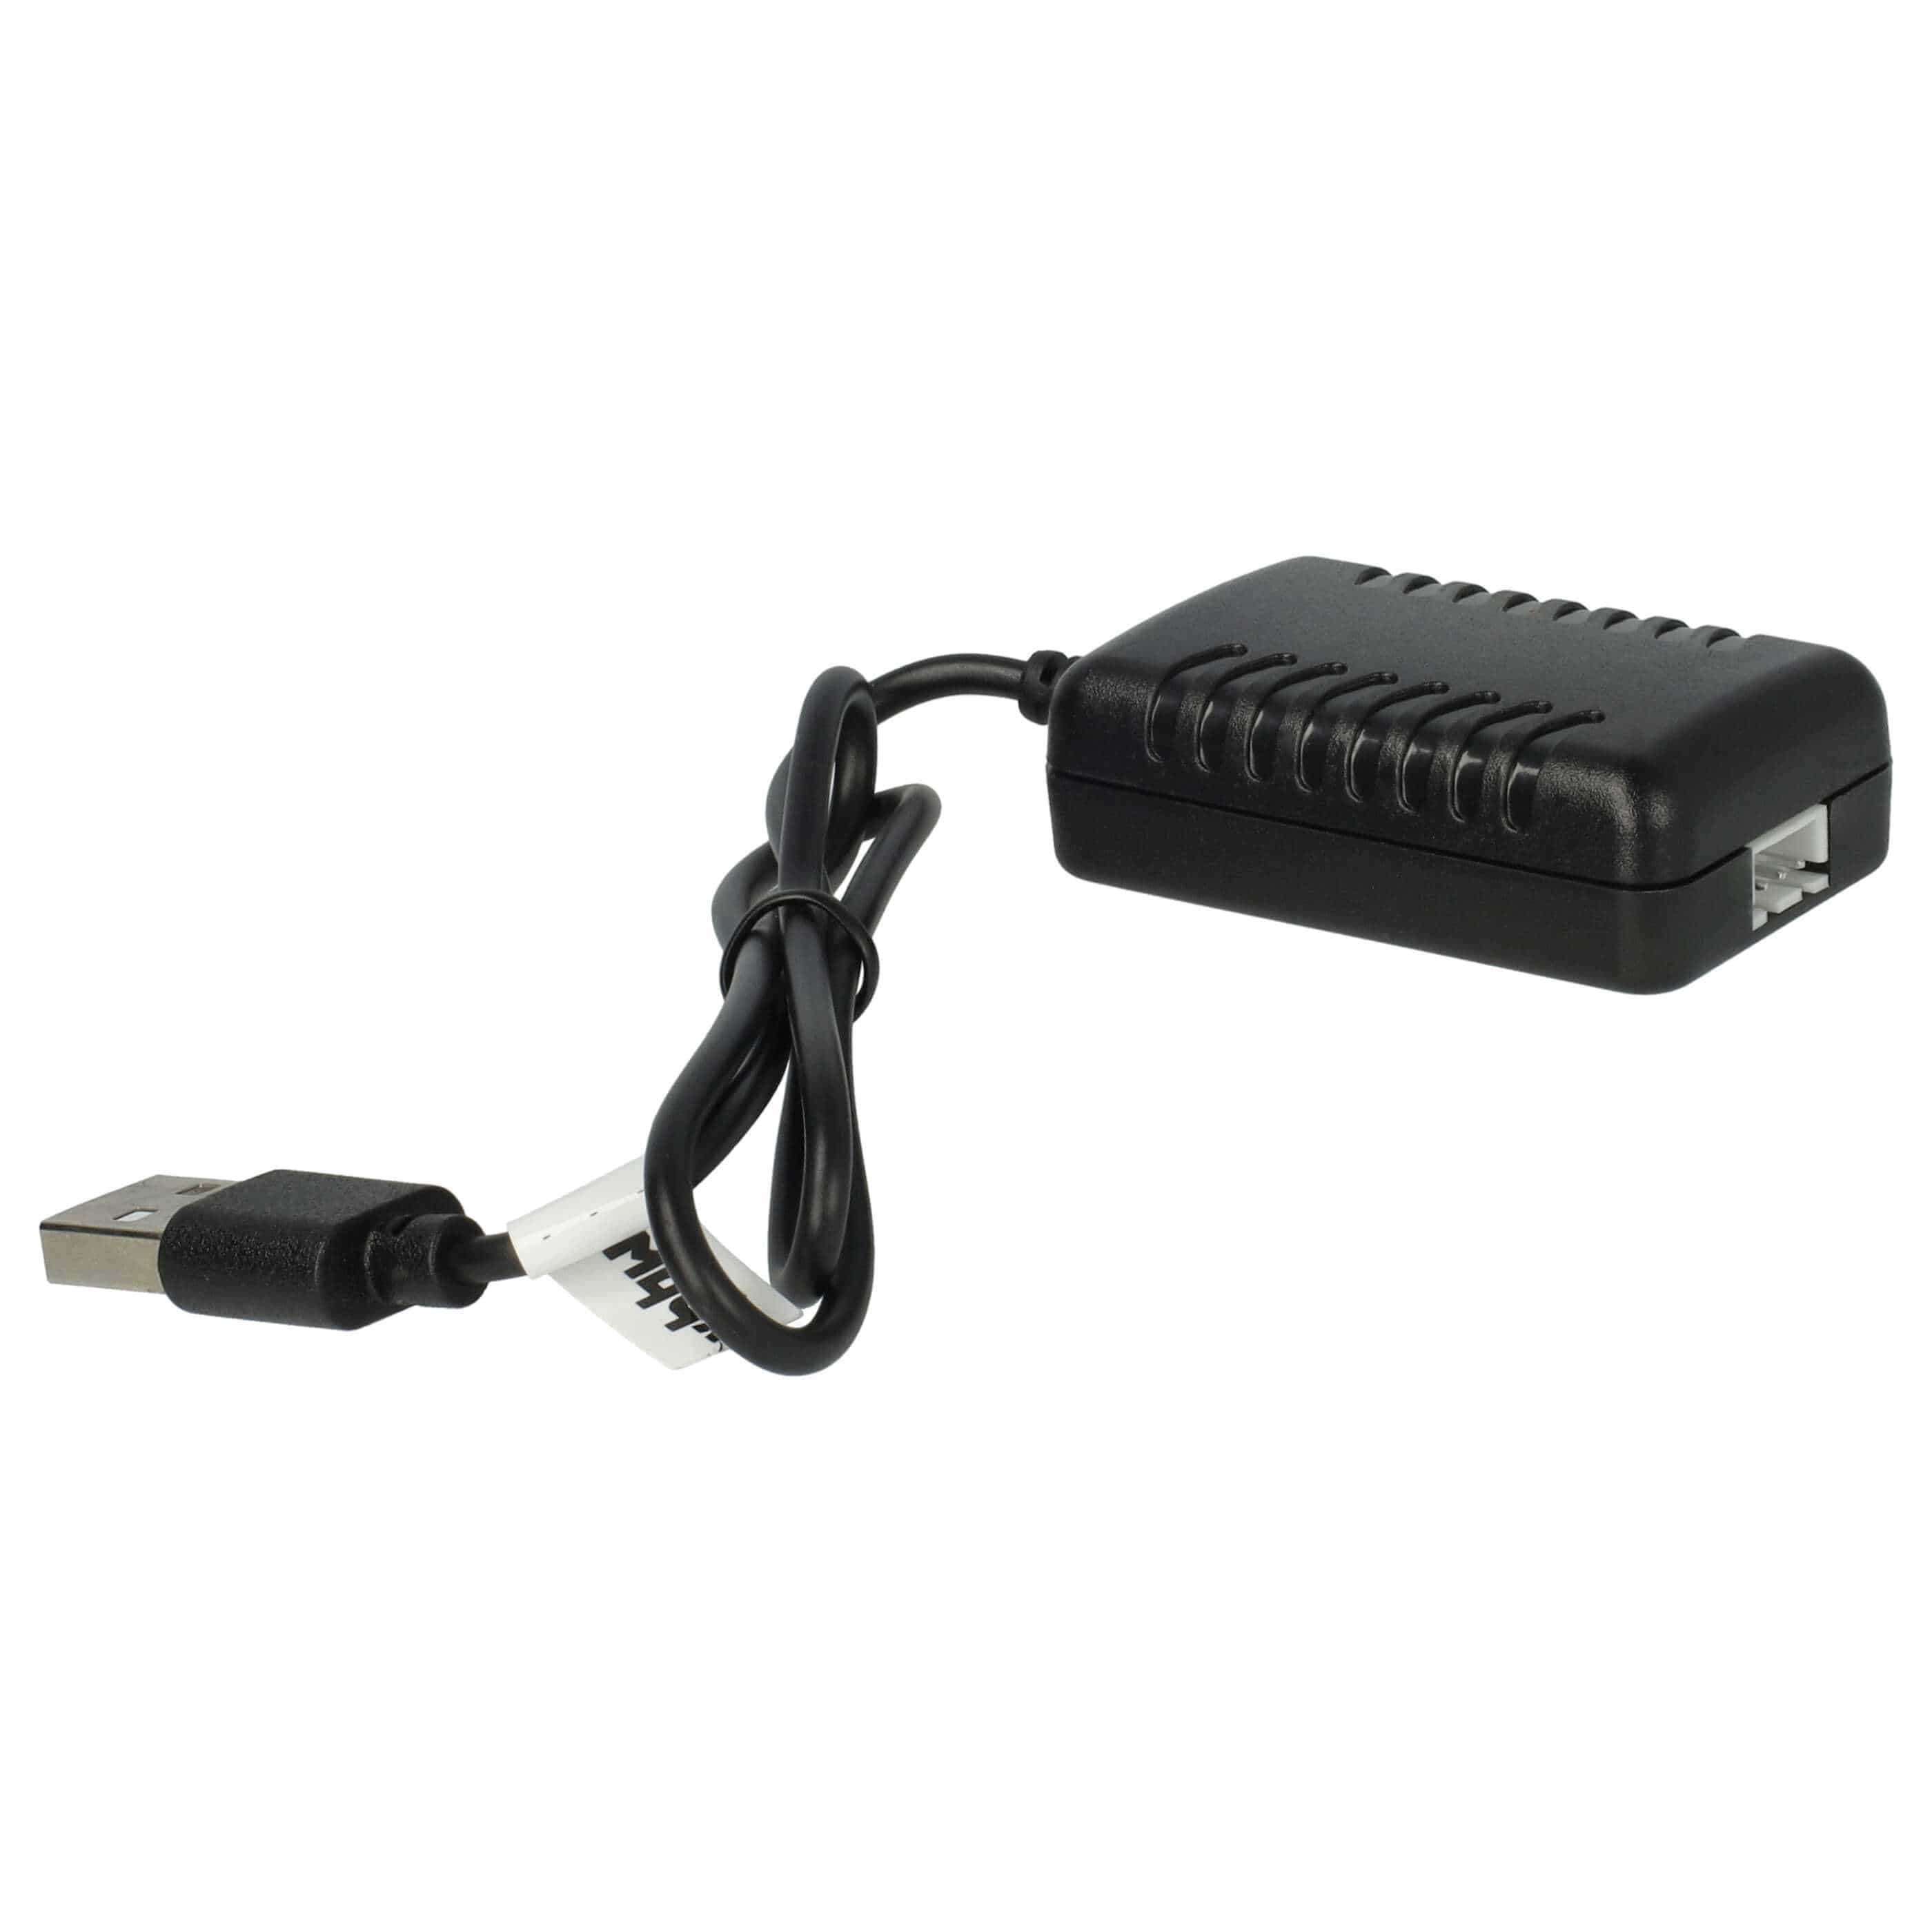 USB-Ladekabel als Ersatz für LJ-0740500E für Wltoys RC-Akkus mit JST XH-3P-Anschluss - 55cm 7.4V, 2A